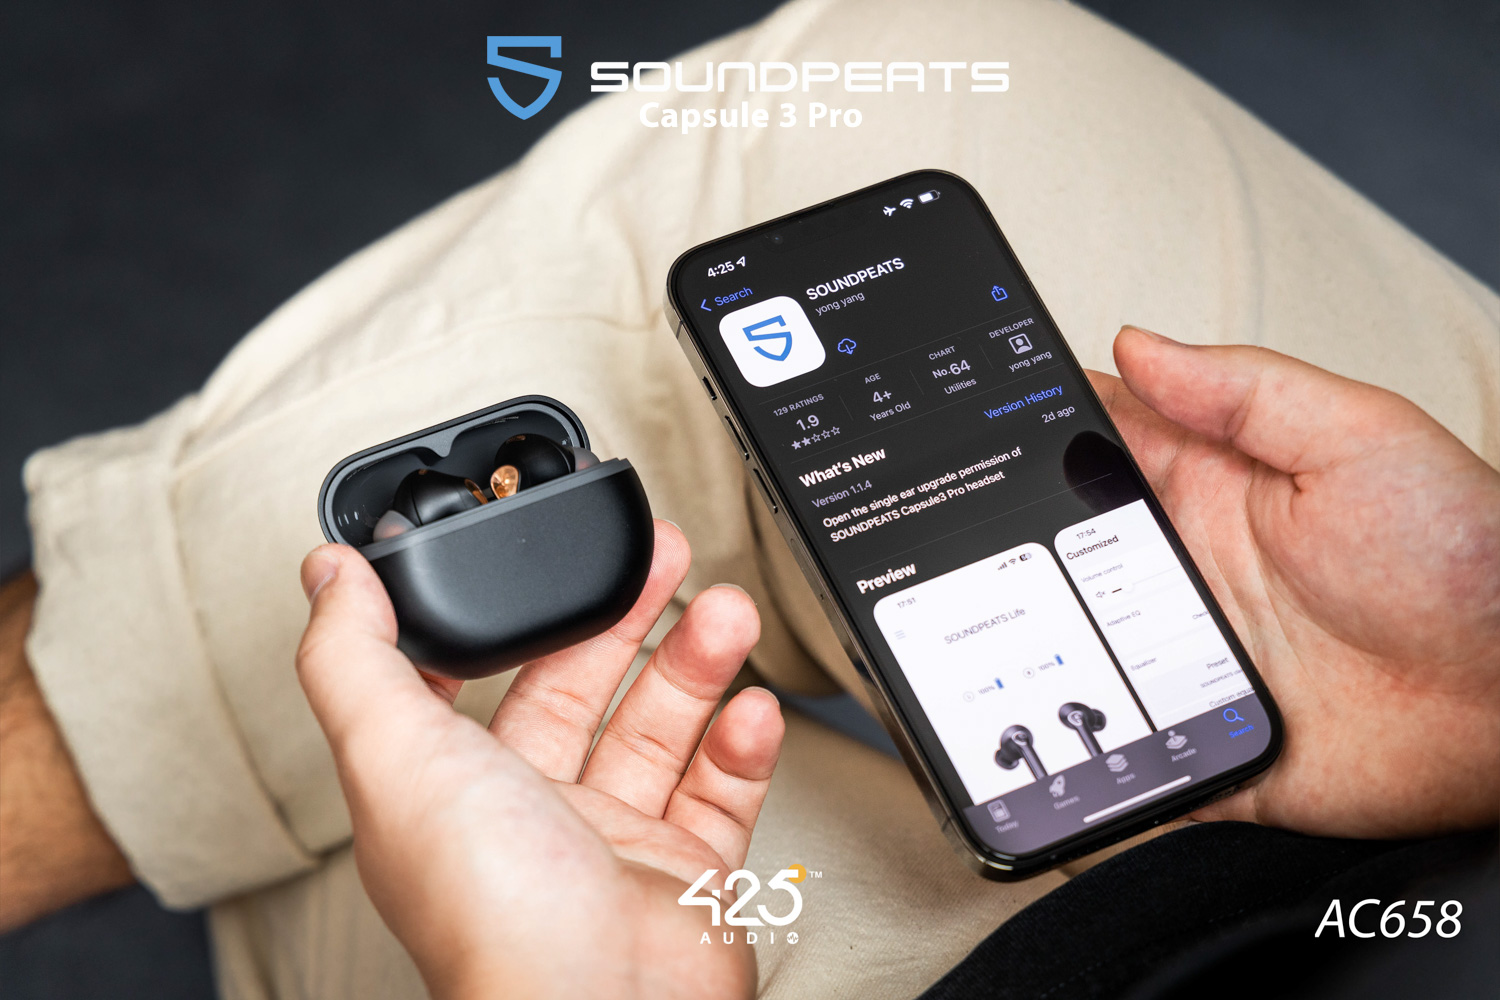 SoundPEATS Capsule 3 Pro,True Wireless,หูฟังไร้สาย,หูฟังบลูทูธ,หูฟังตัดเสียงรบกวน,Active Noise Cancelling,Ambient Mode,หูฟังไมค์ดี